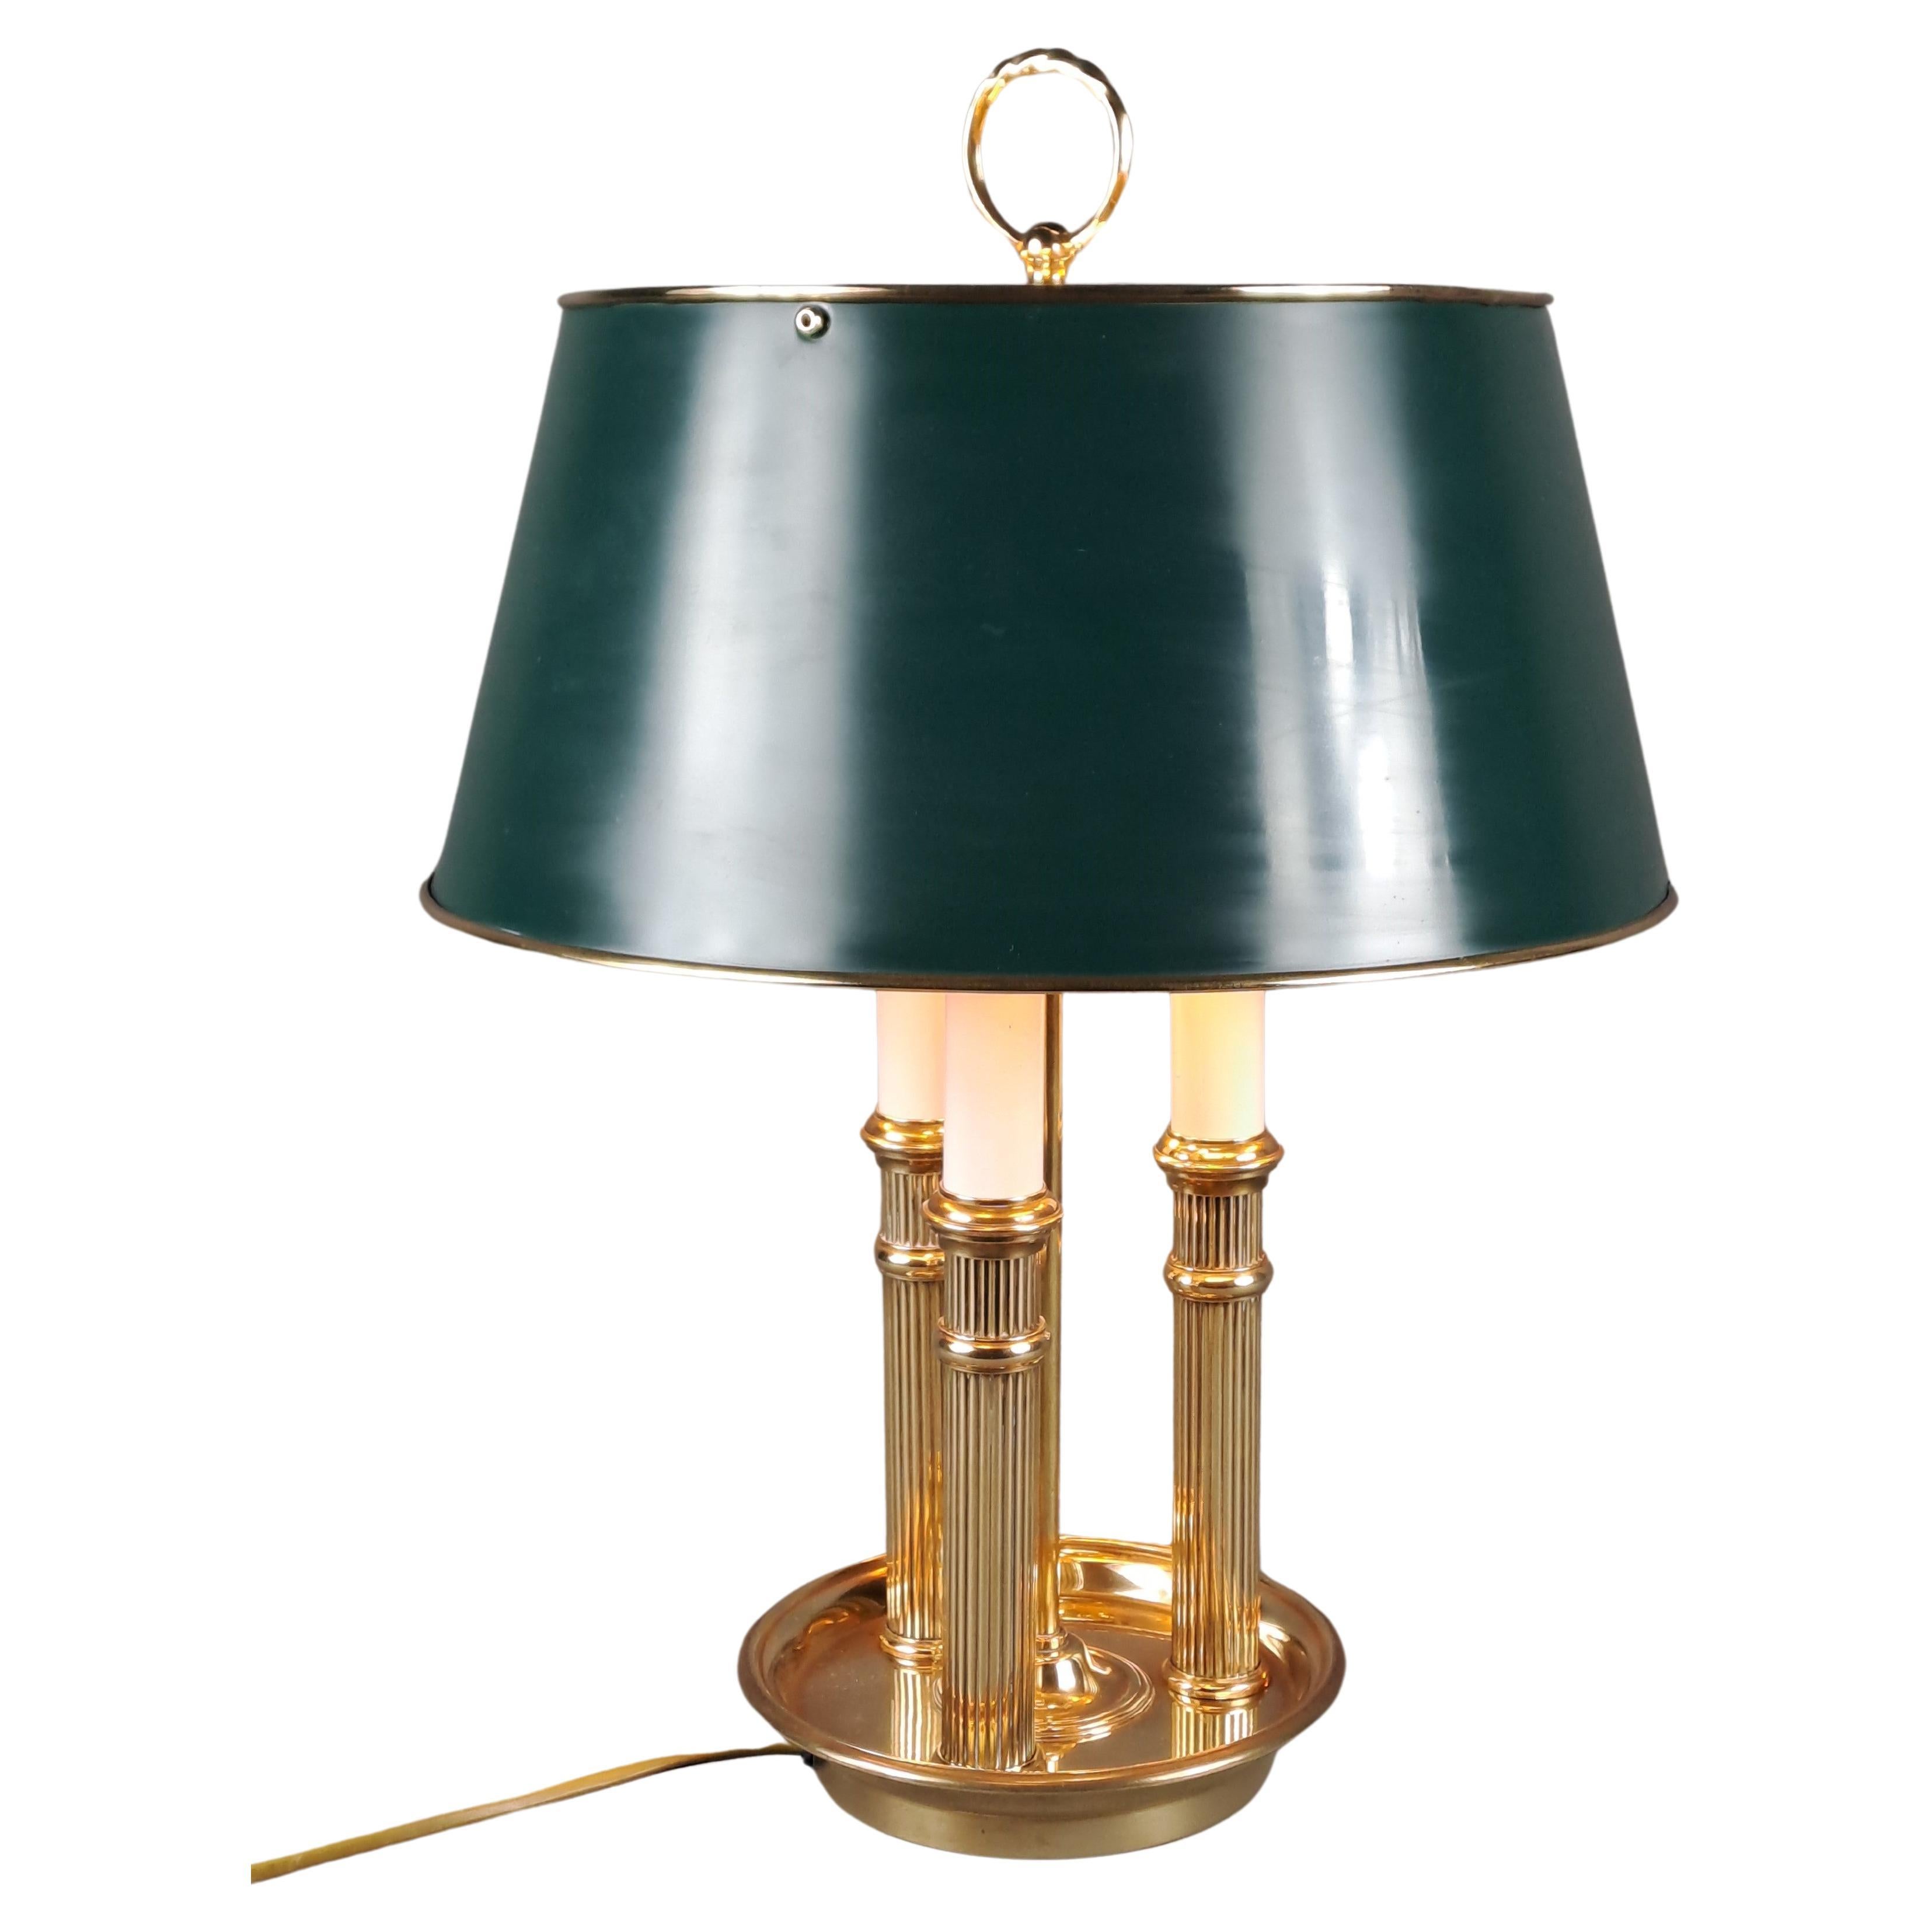 Bouillotte-Lampe im Empire-Stil aus vergoldeter Bronze